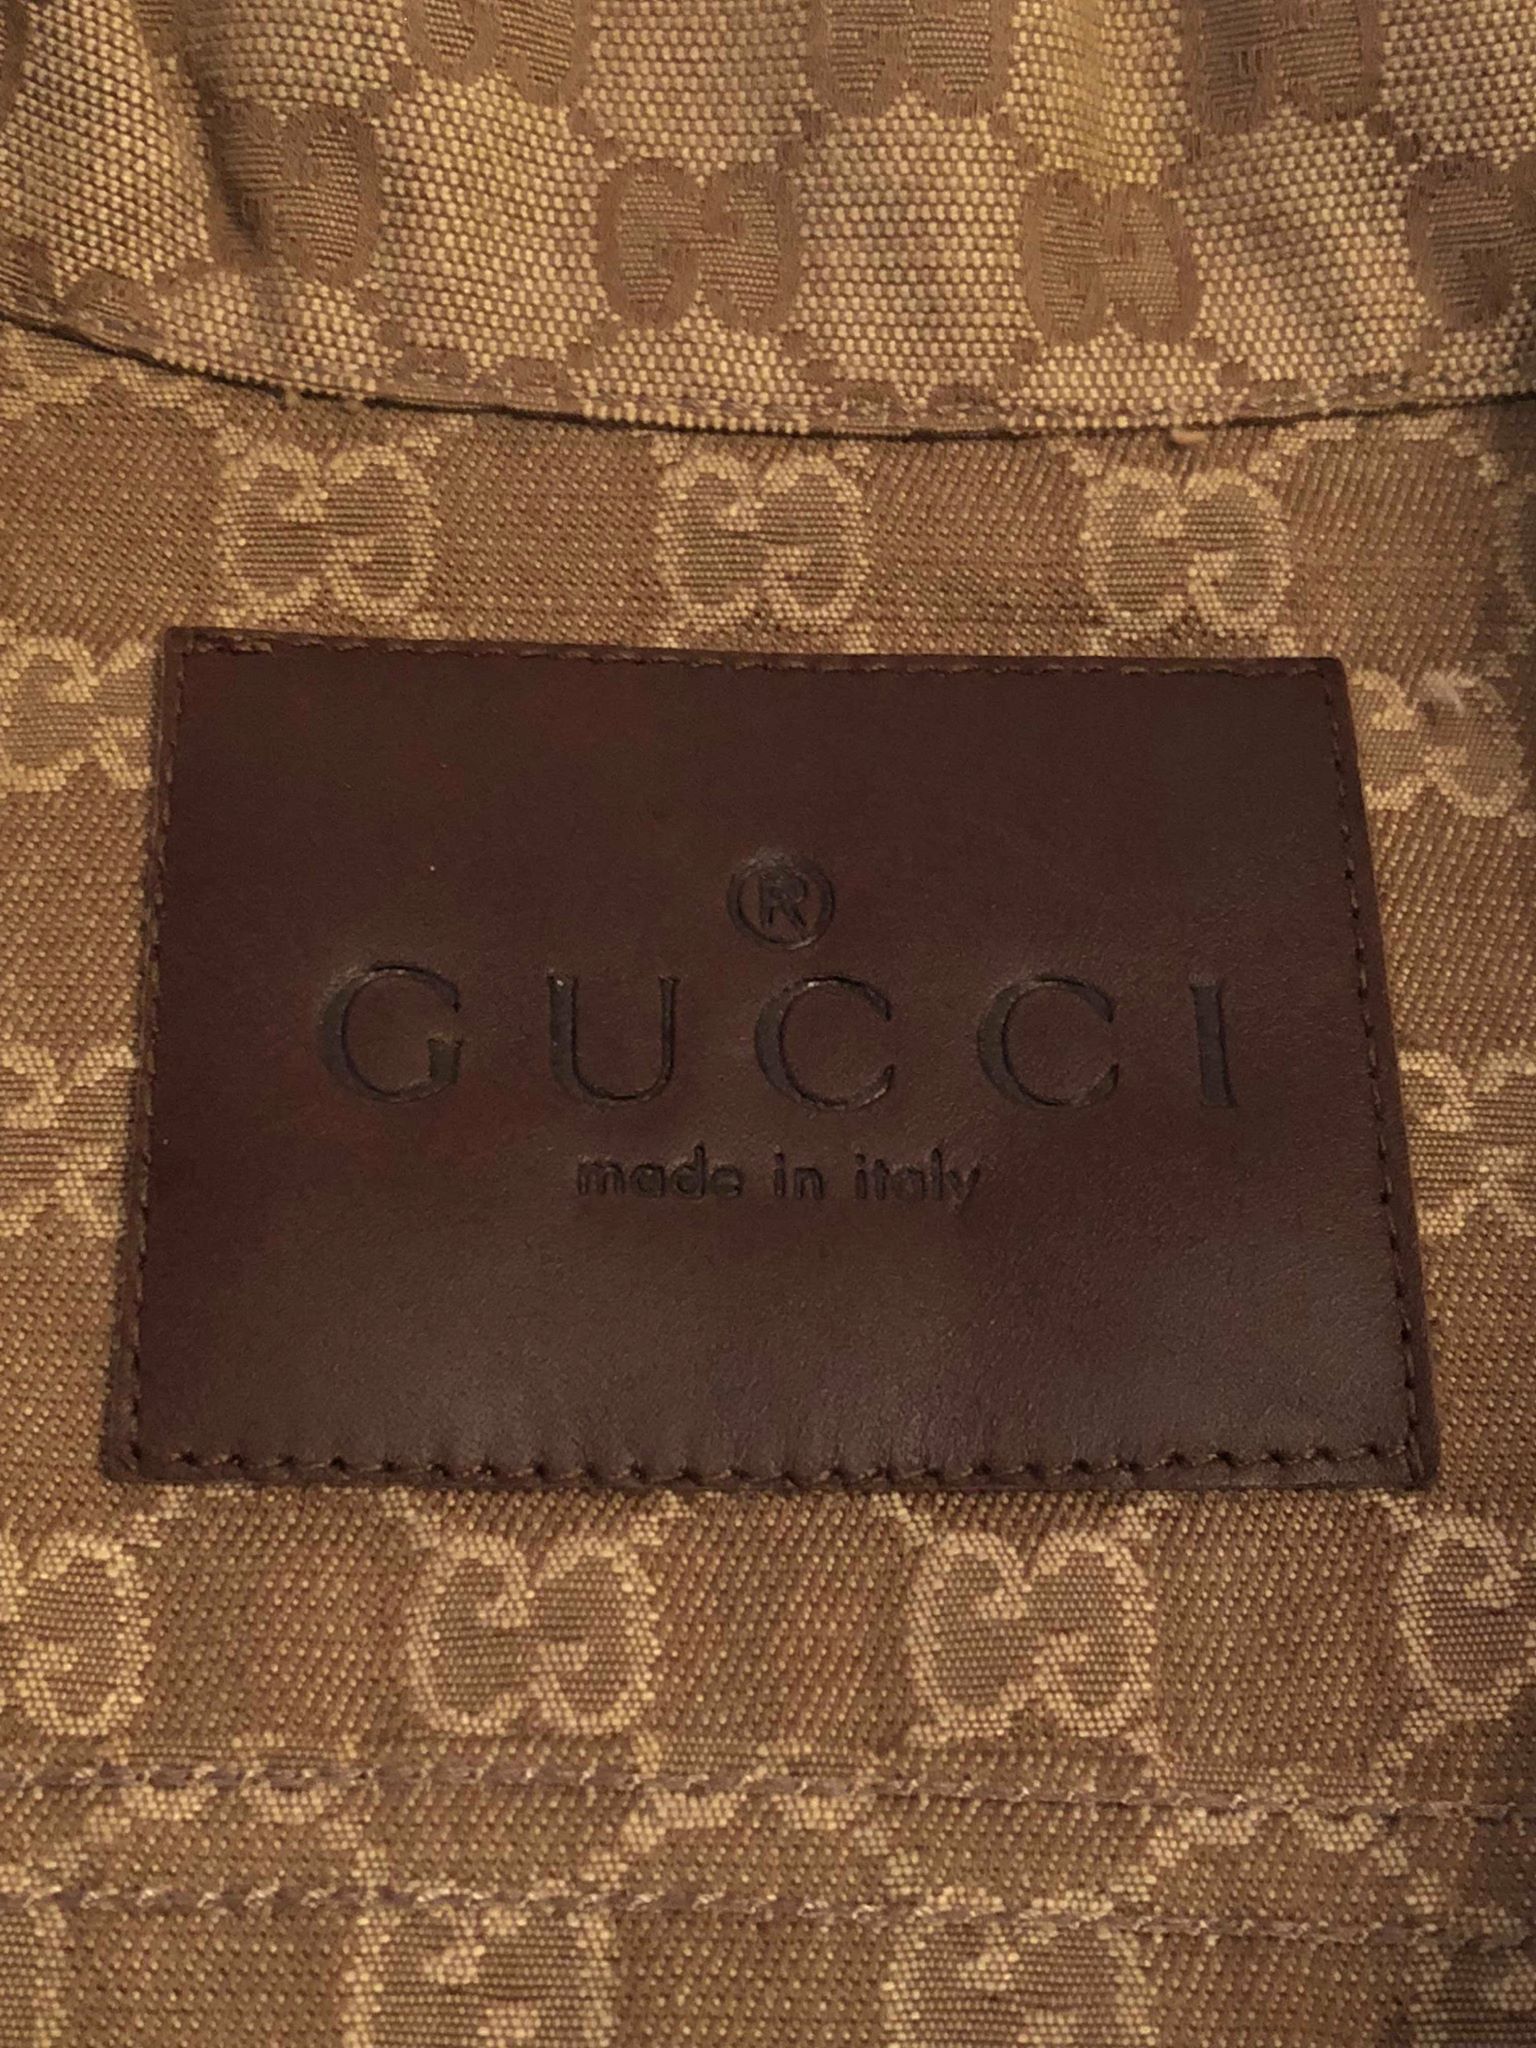 Gucci QUCIK SALE - ULTRA RARE VINTAGE GUCCI GG MONOGRAM DENIM JACKET Size US M / EU 48-50 / 2 - 3 Thumbnail